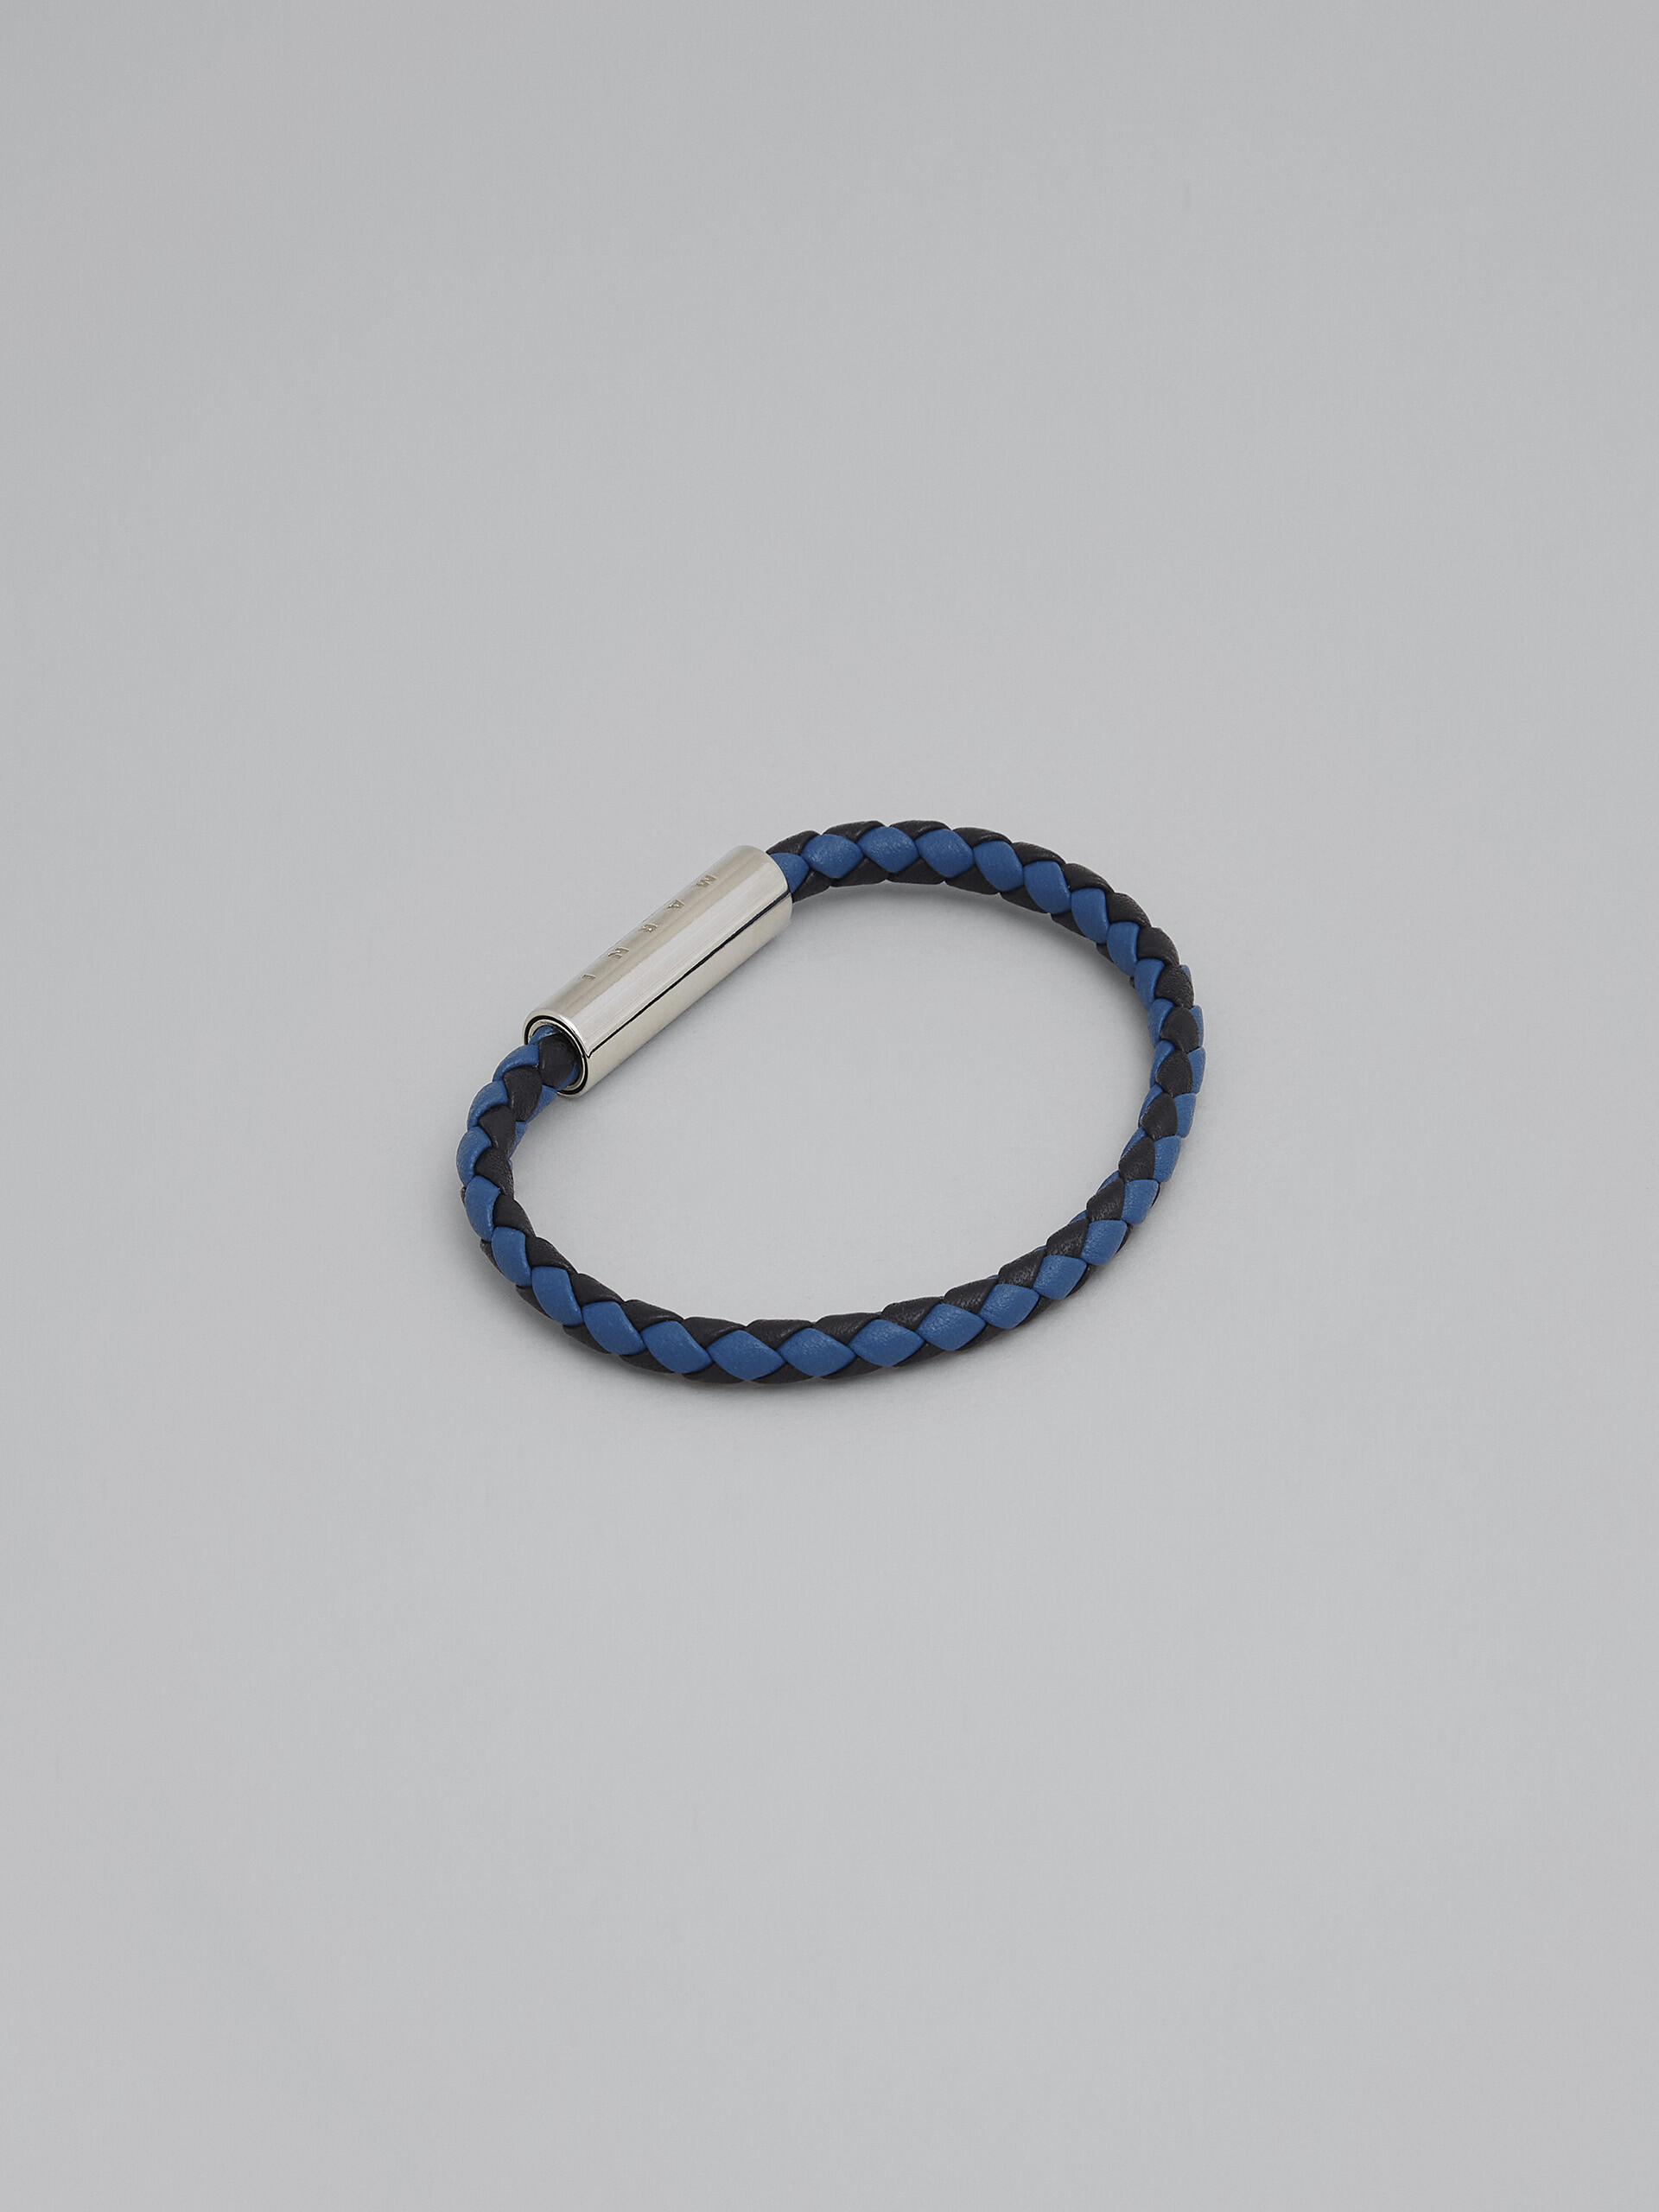 Black and blue braided leather bracelet - Bracelets - Image 3